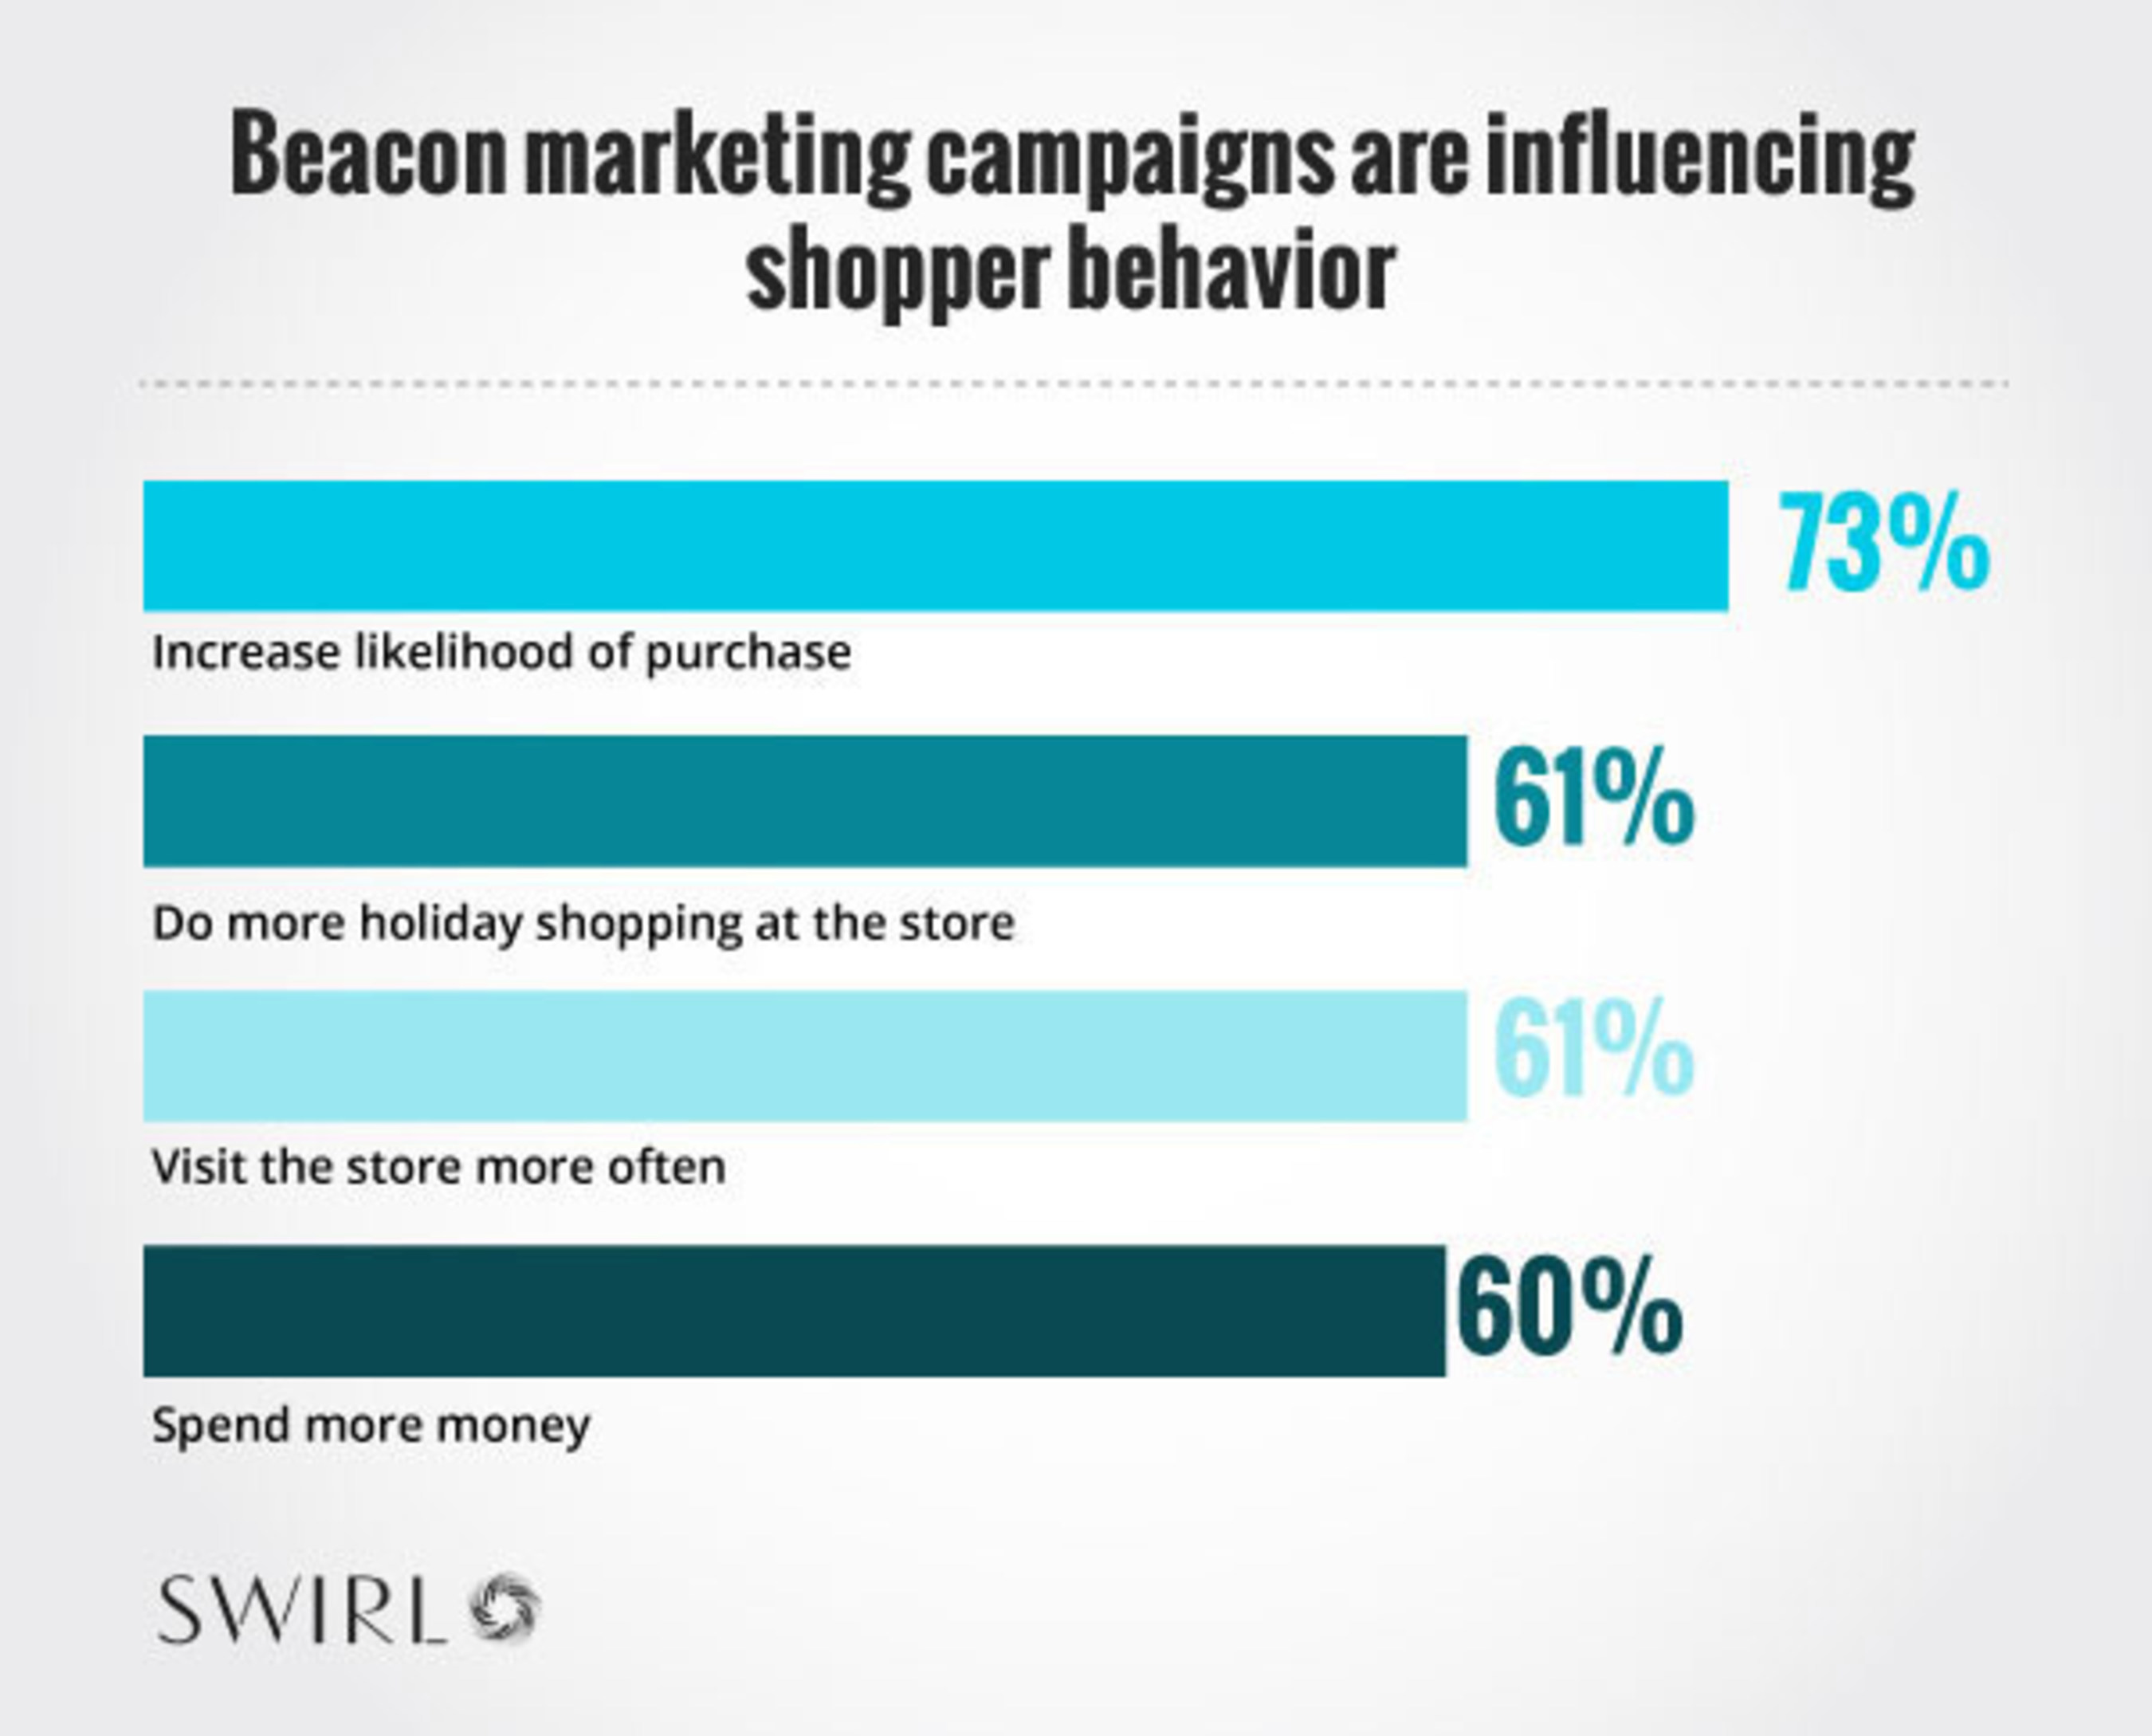 Beacon marketing campaigns are influencing shopper behavior